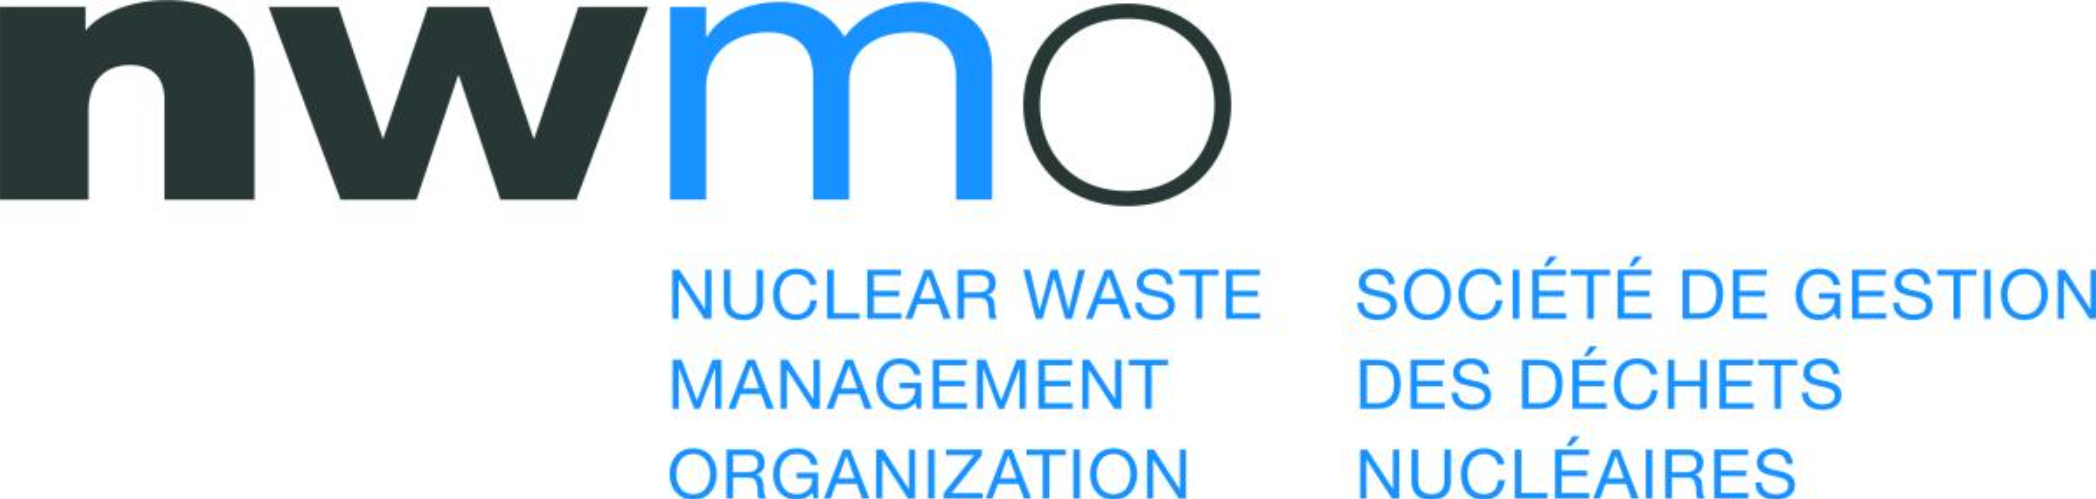 Nuclear Waste Management Organization